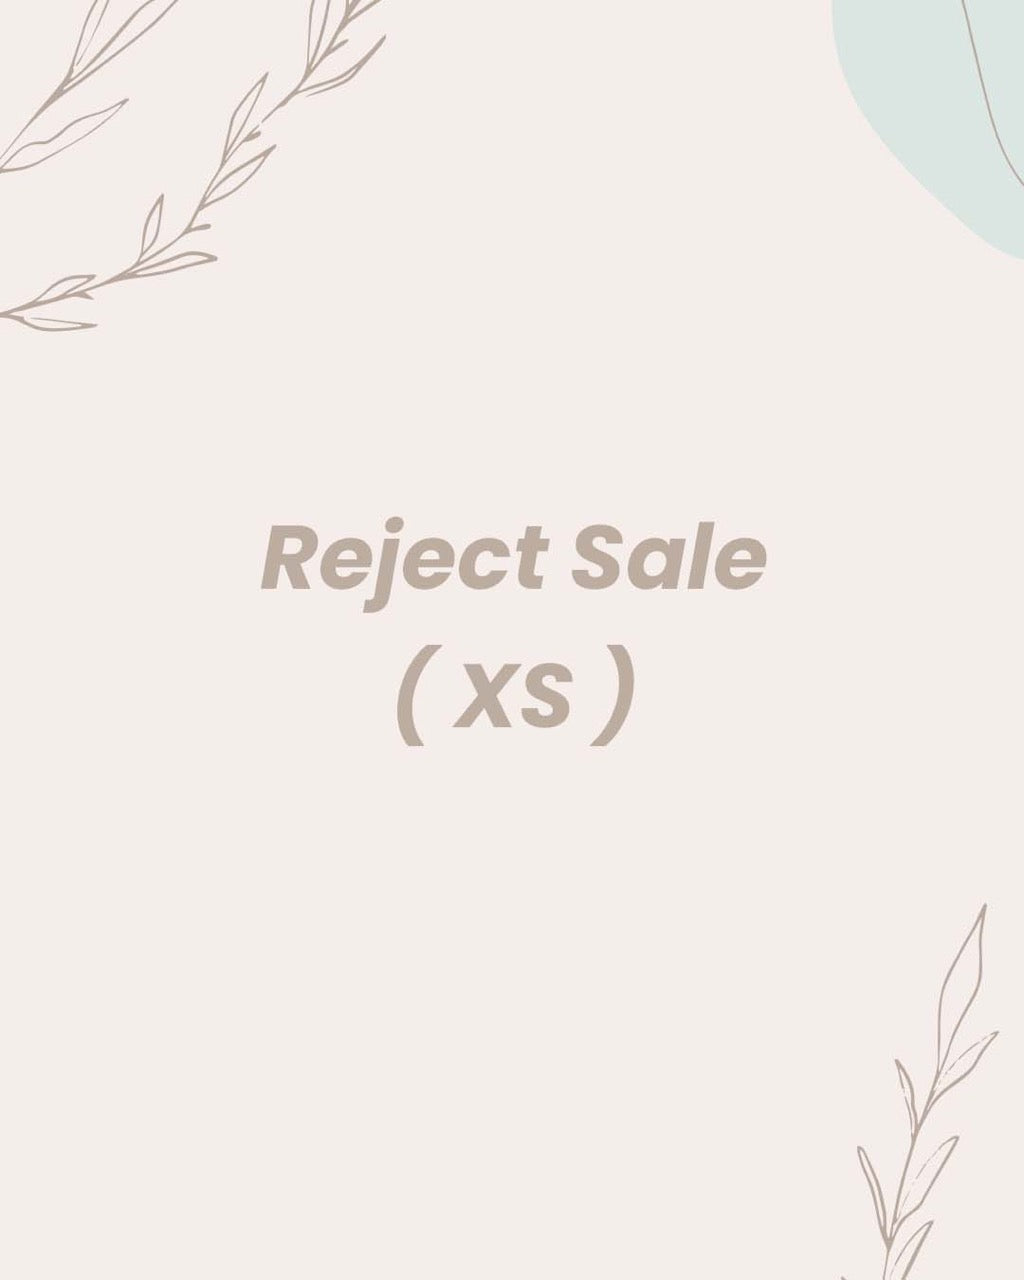 (XS) - REJECT SALE